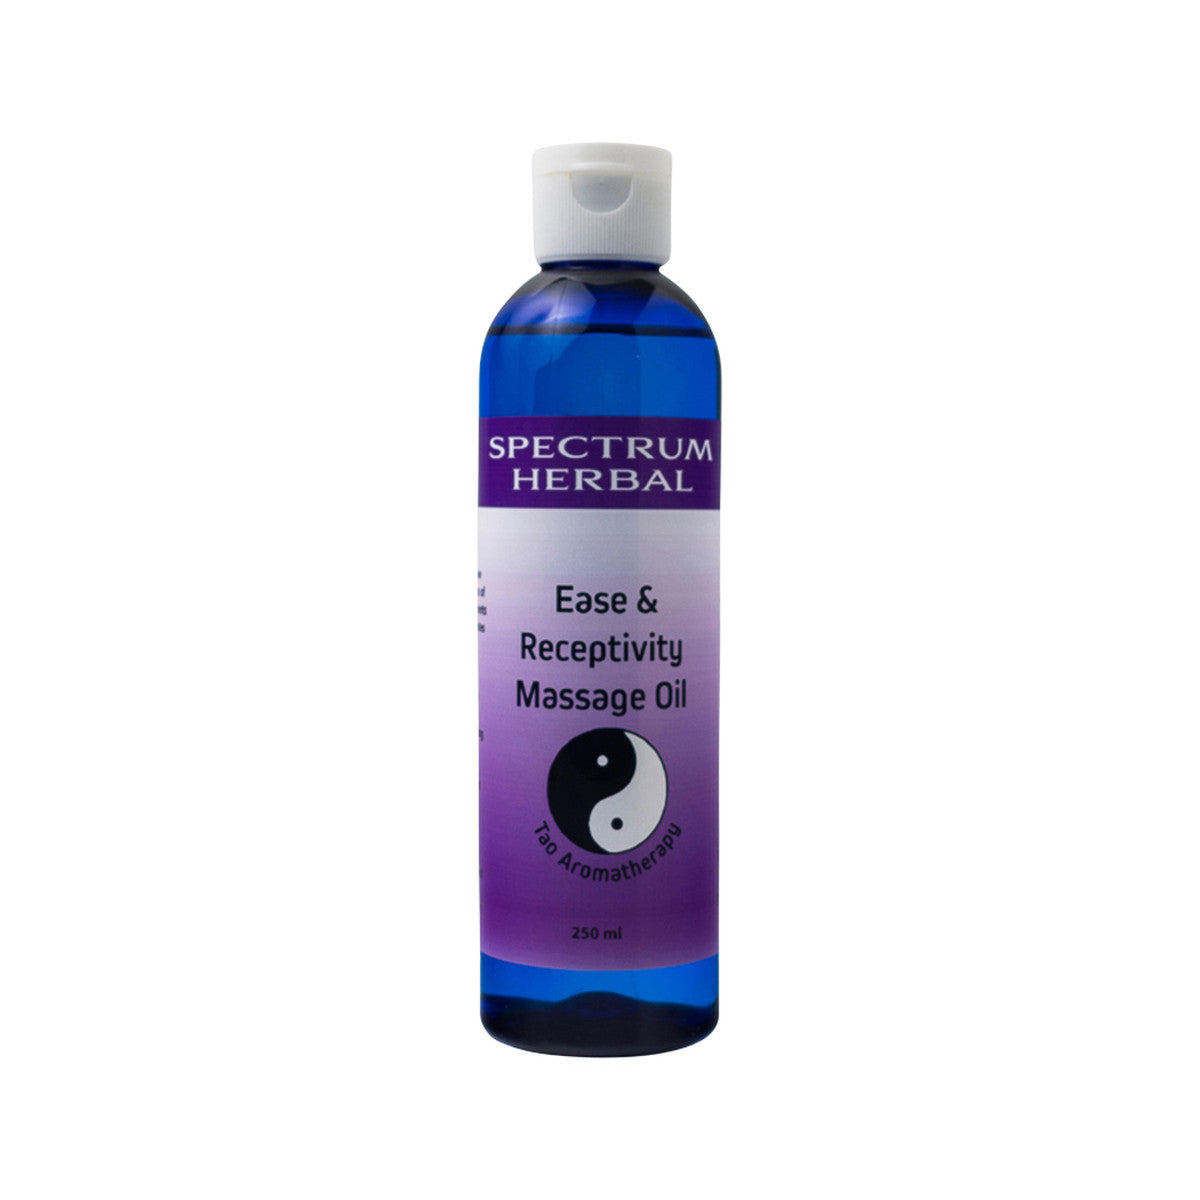 Spectrum Herbal Tao Arom Massage Oil Ease Receptivity 250ml